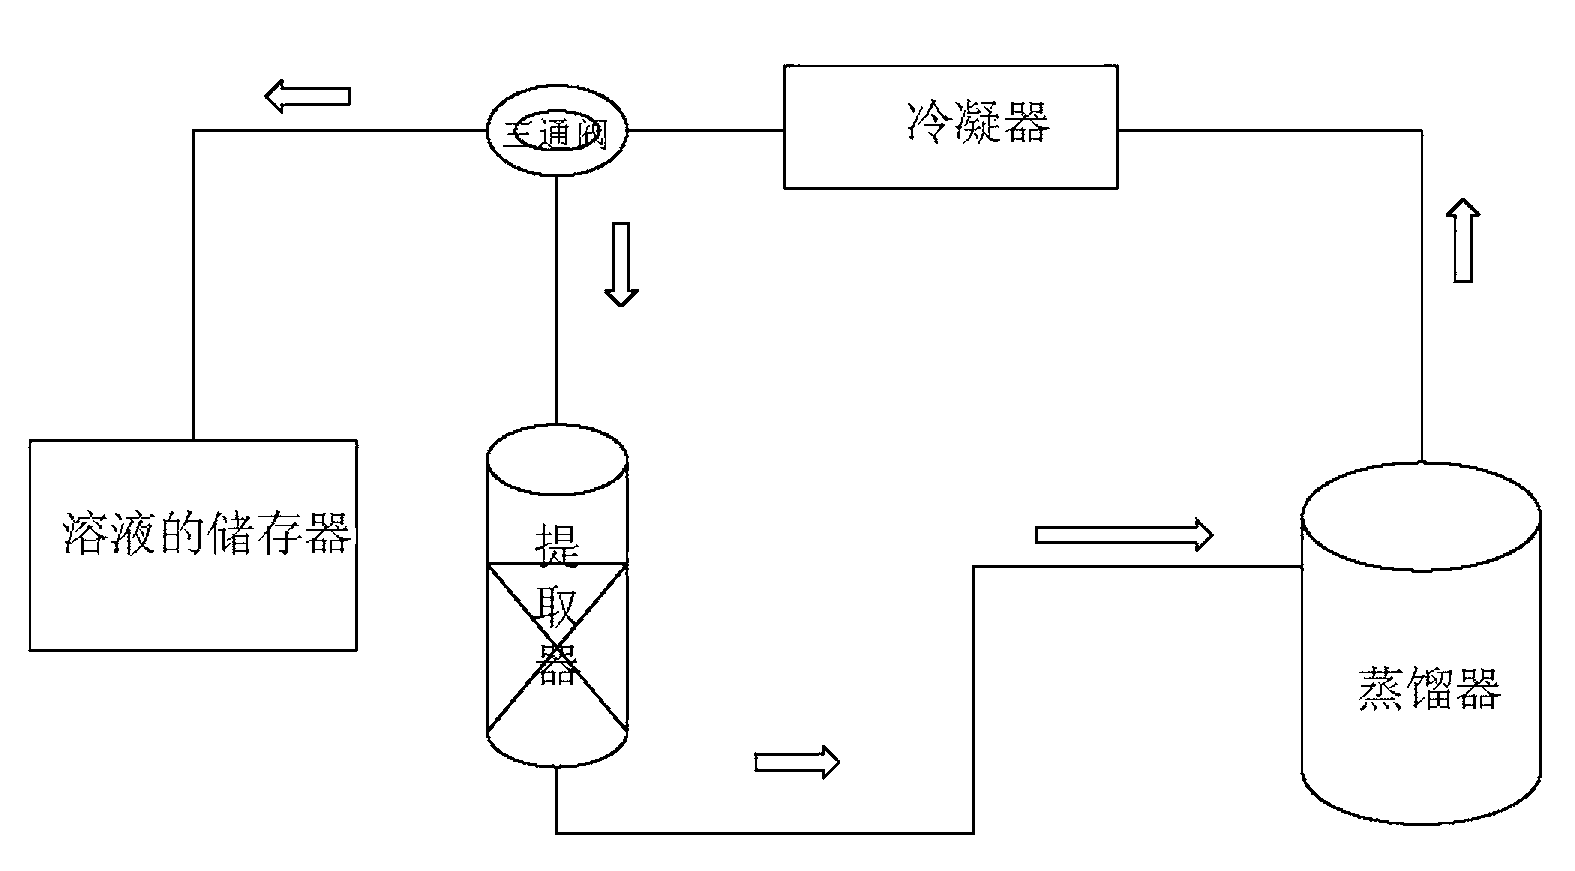 Extraction method of dogwood kernel oil